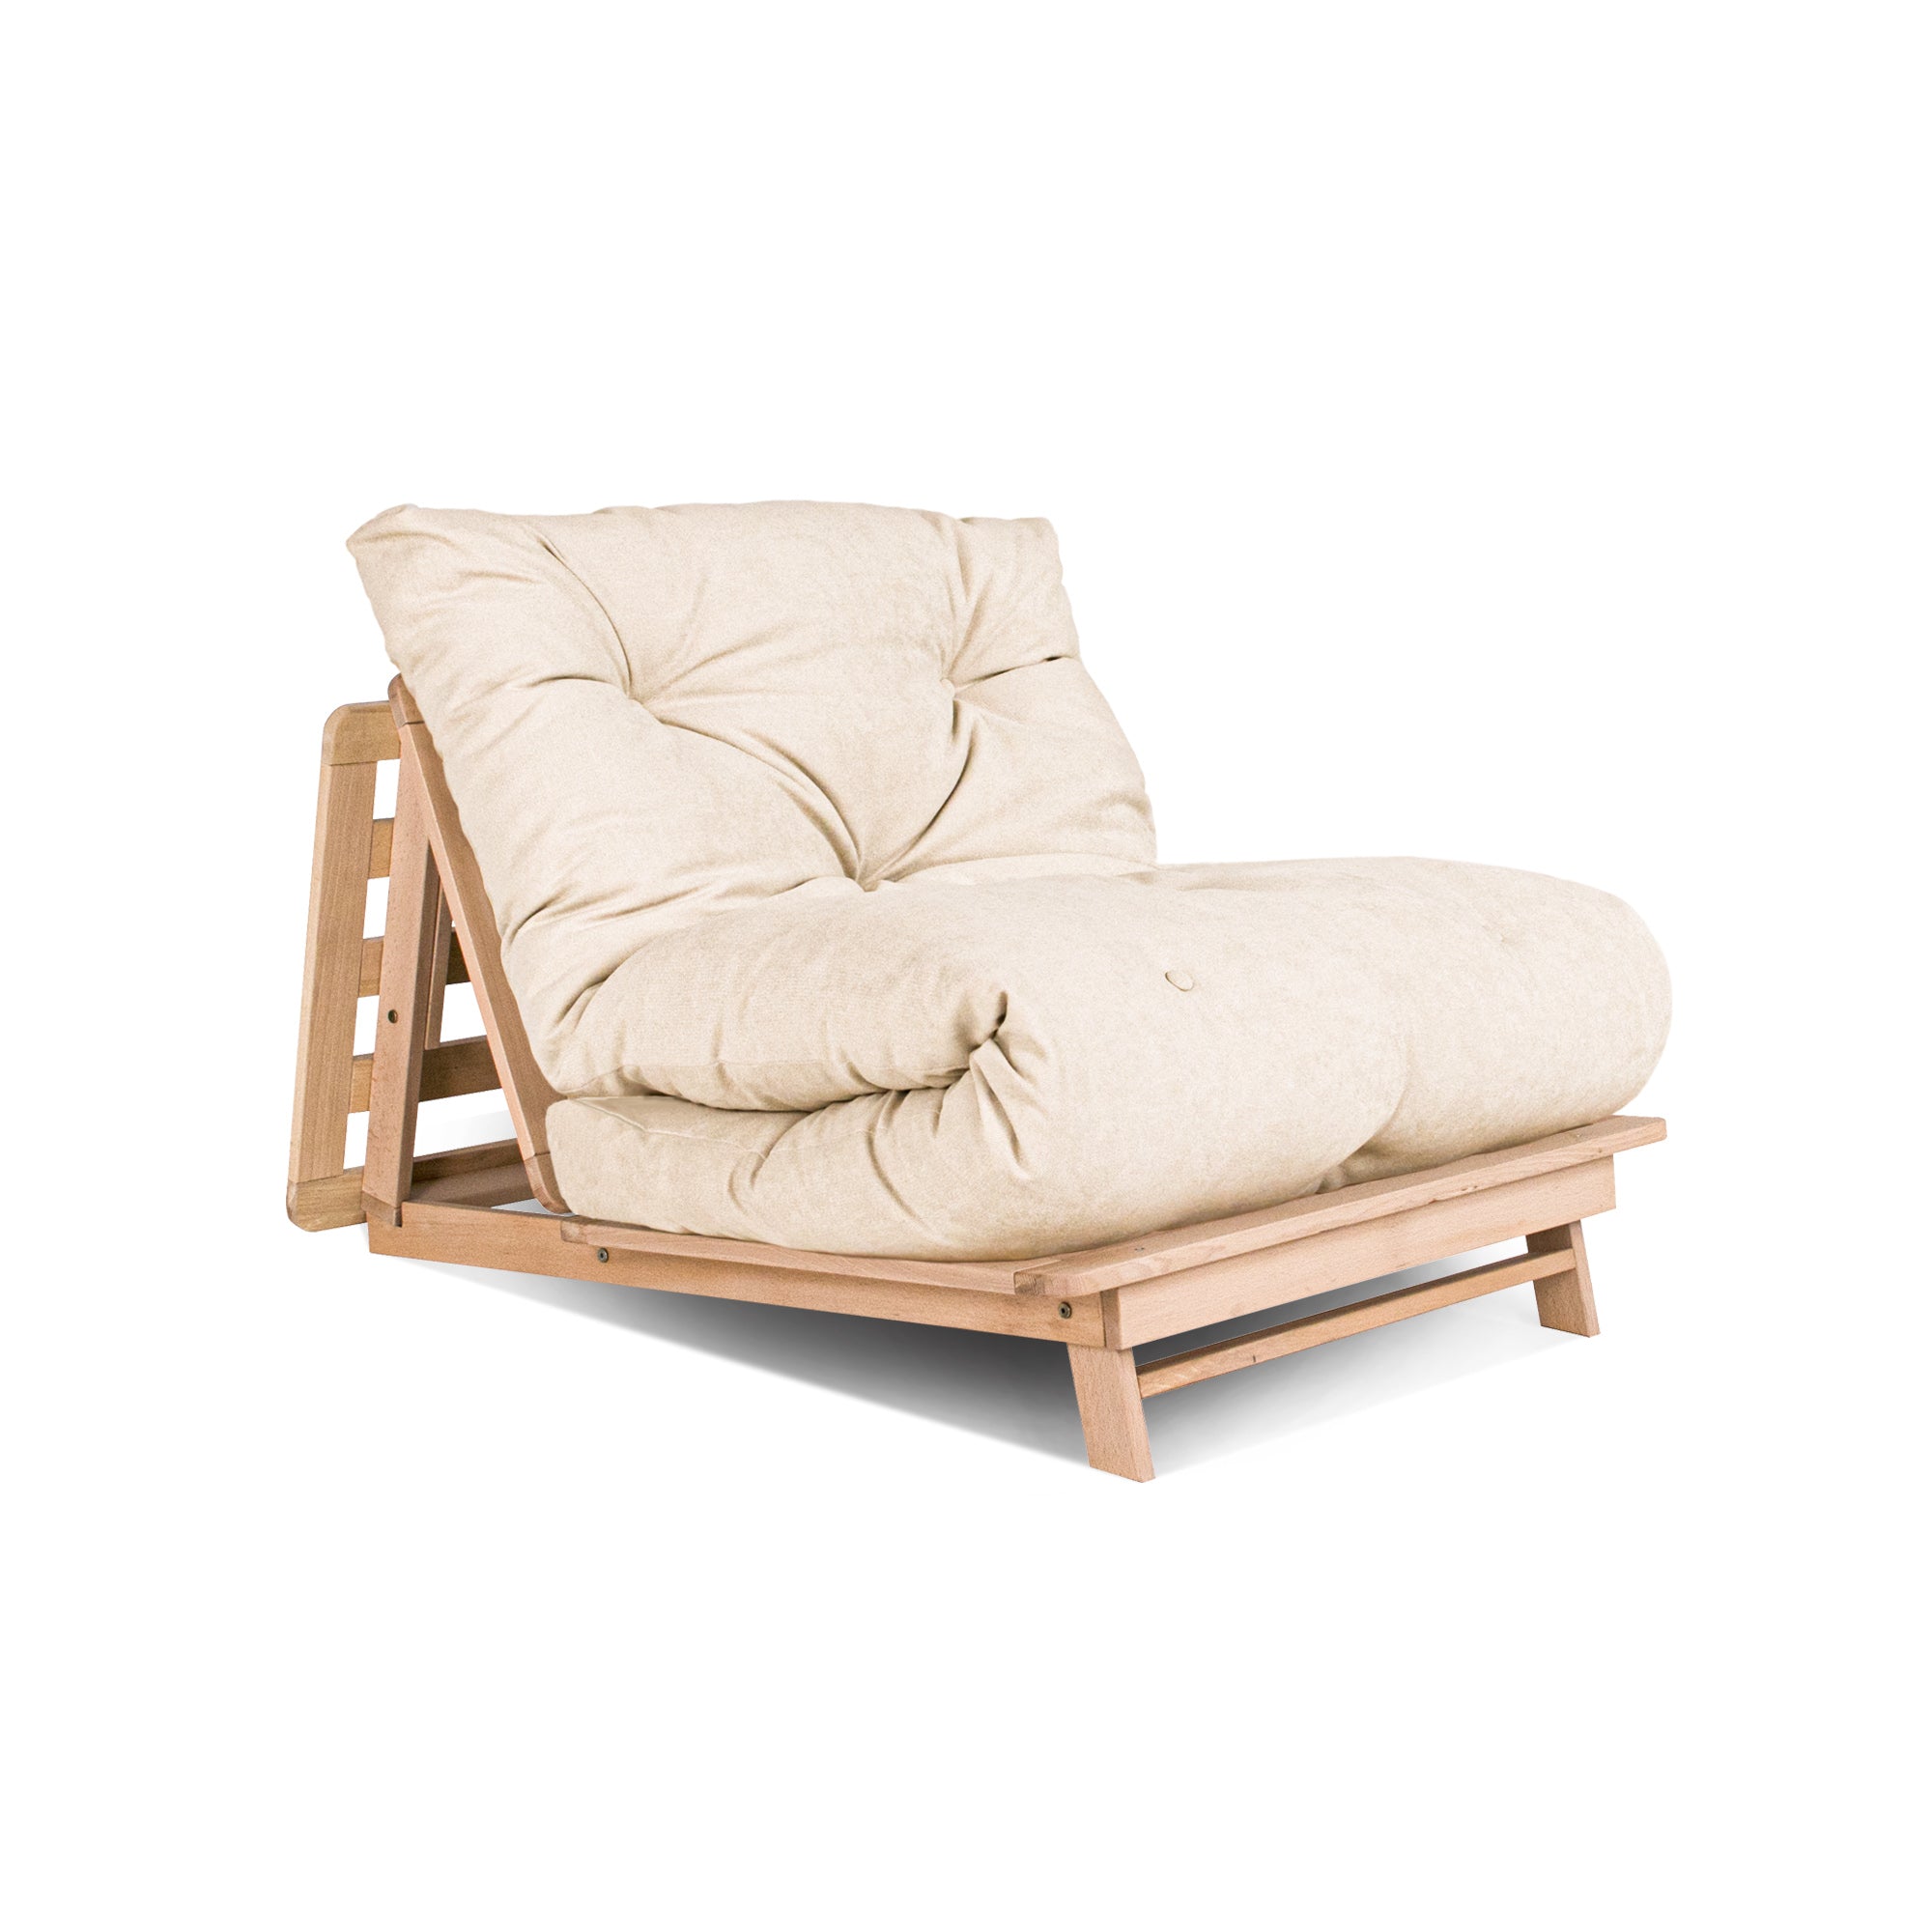 LAYTI-90 Futon Chair, Beech Wood Frame, Natural Colour-creamy fabric